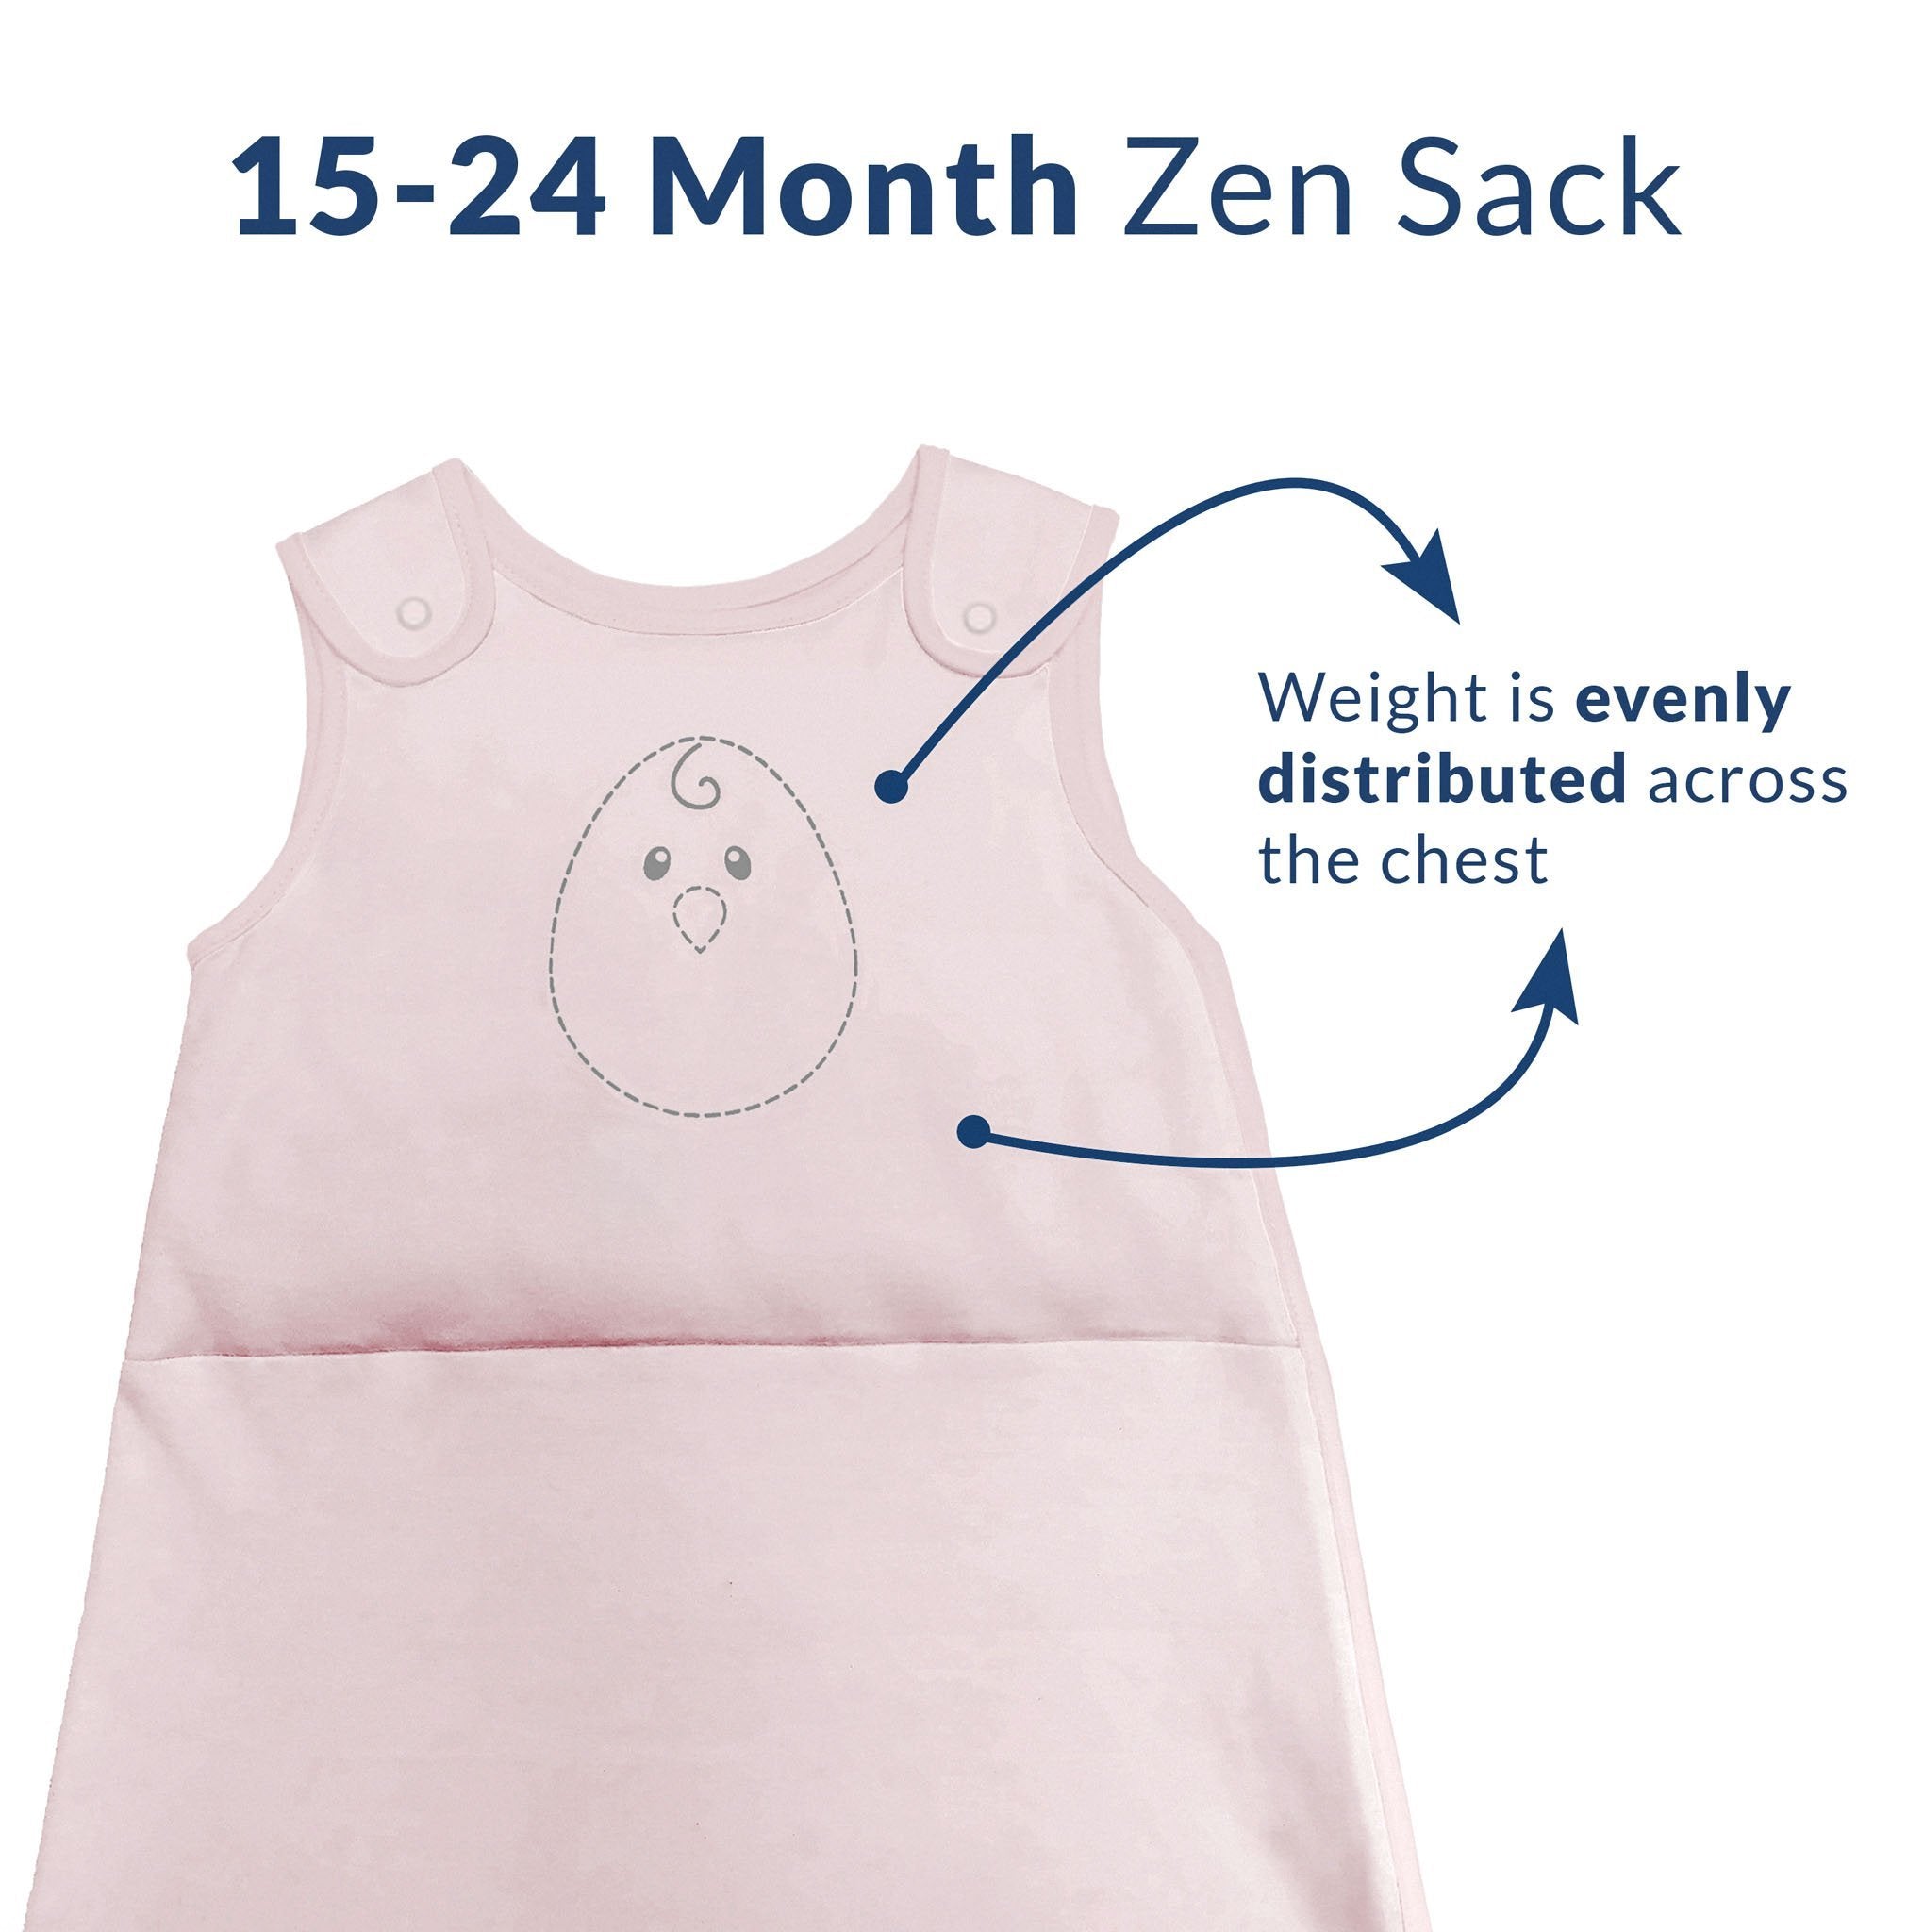 Zen Sack Classic